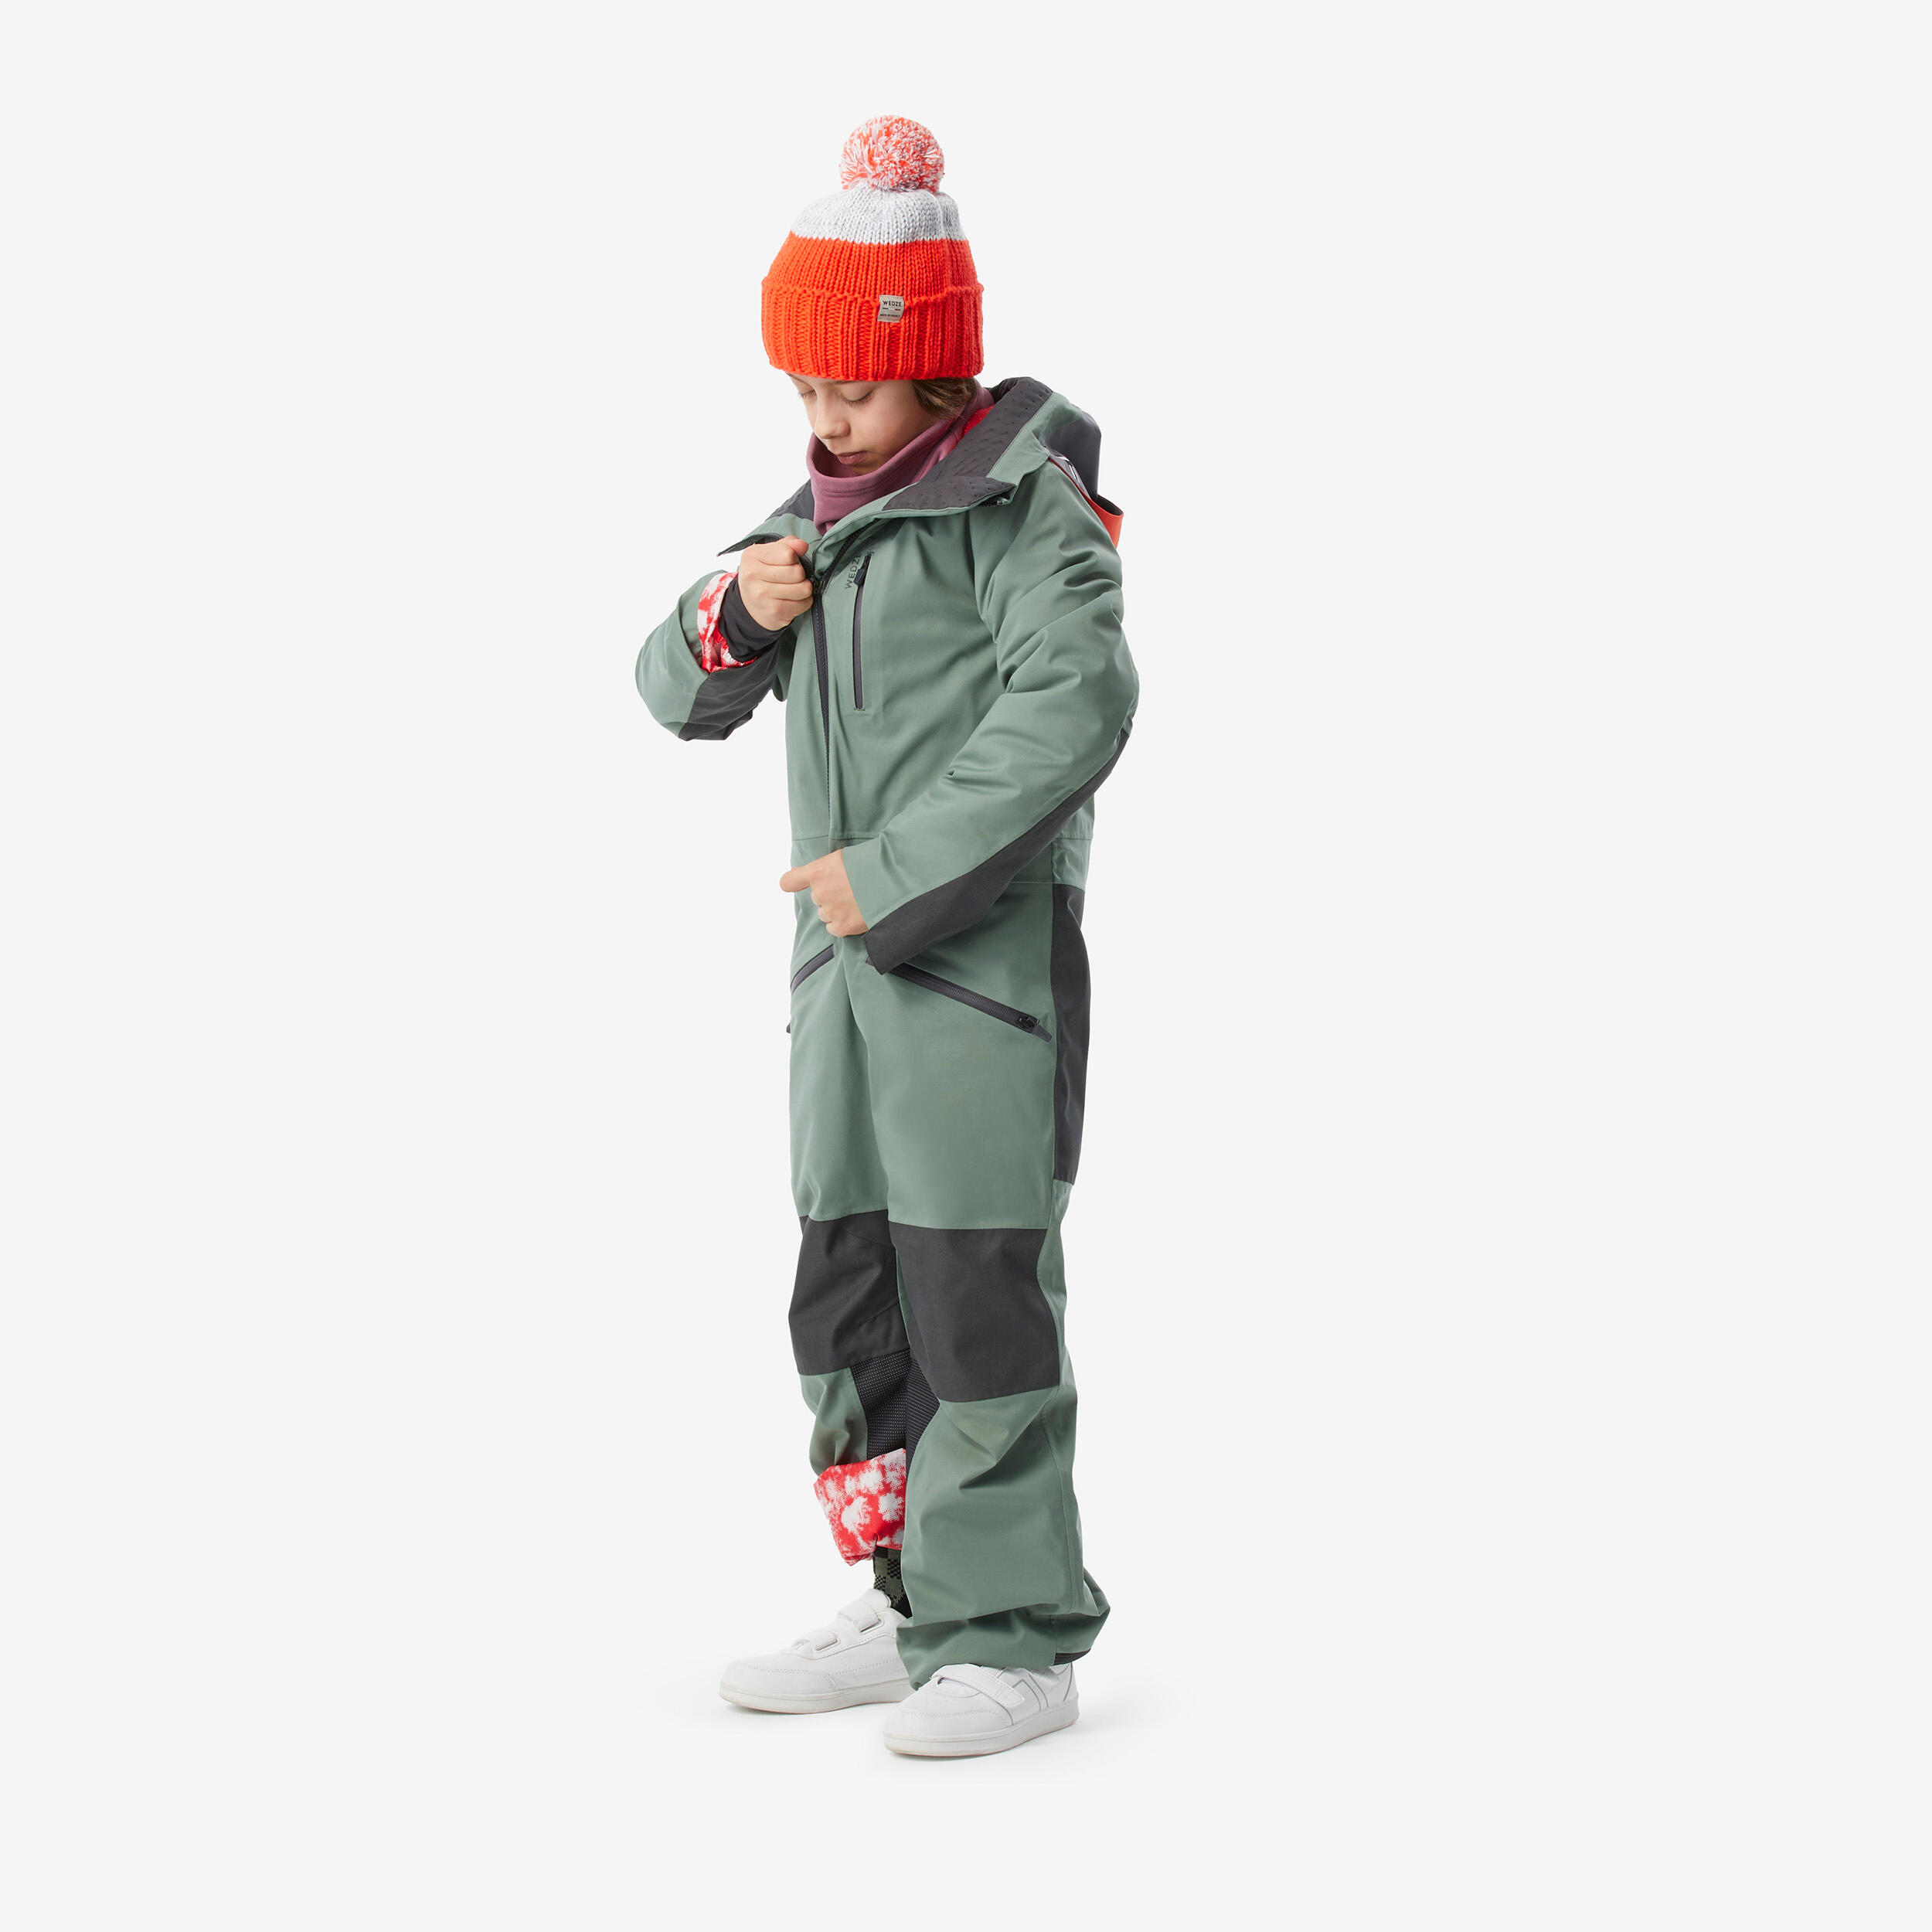 WEDZE Kids’ warm and waterproof ski suit - 900 green 